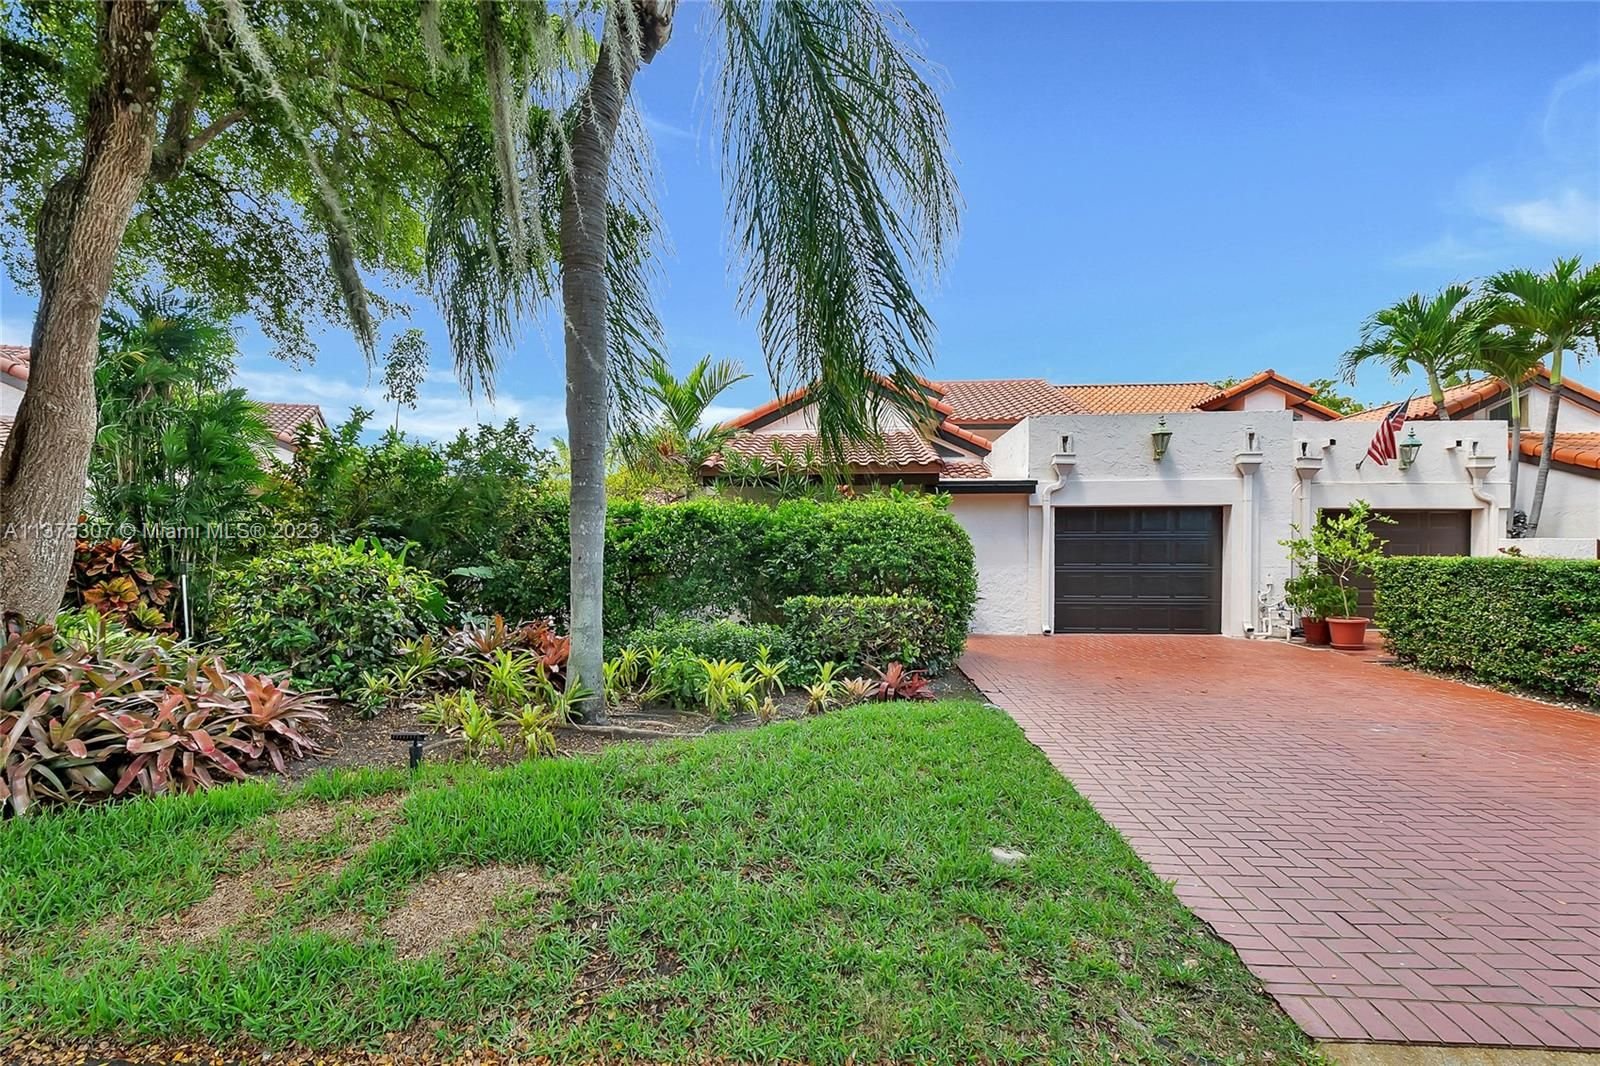 Real estate property located at 8880 78th Pl, Miami-Dade County, TARA, Miami, FL